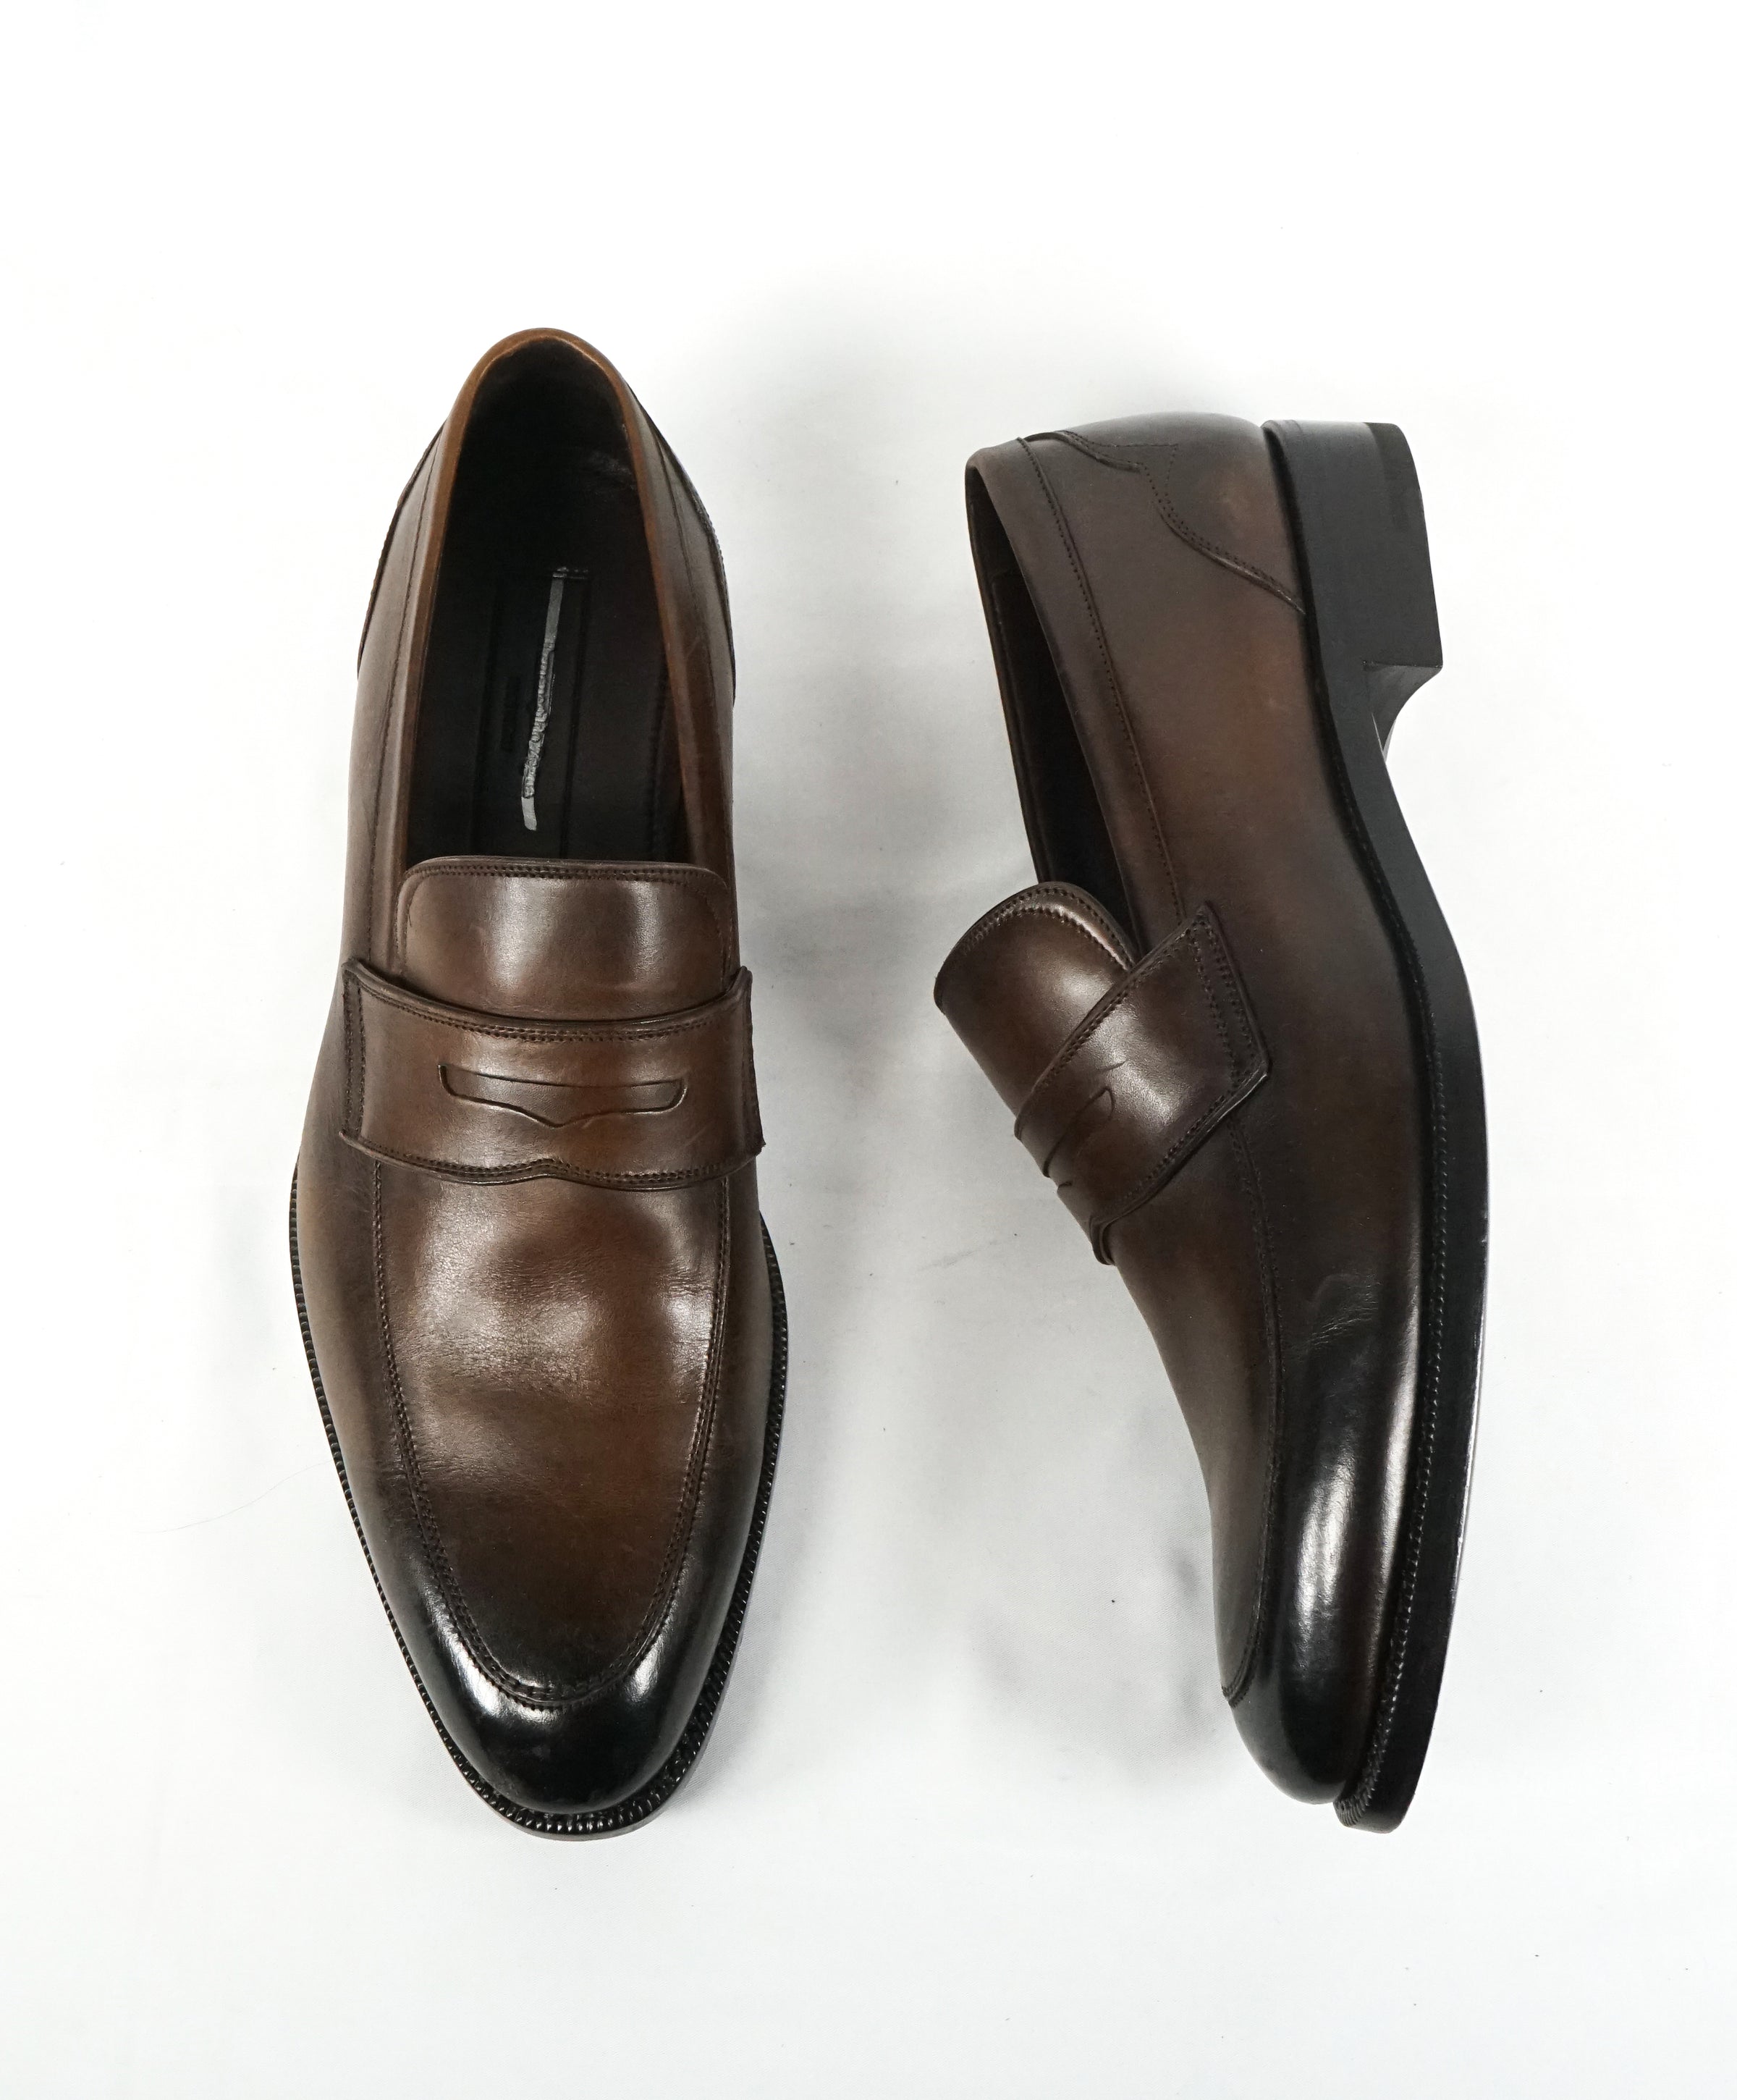 Ermenegildo Zegna NWB Penny Loafer Dress Shoes Size 11 12 US In Dark Brown